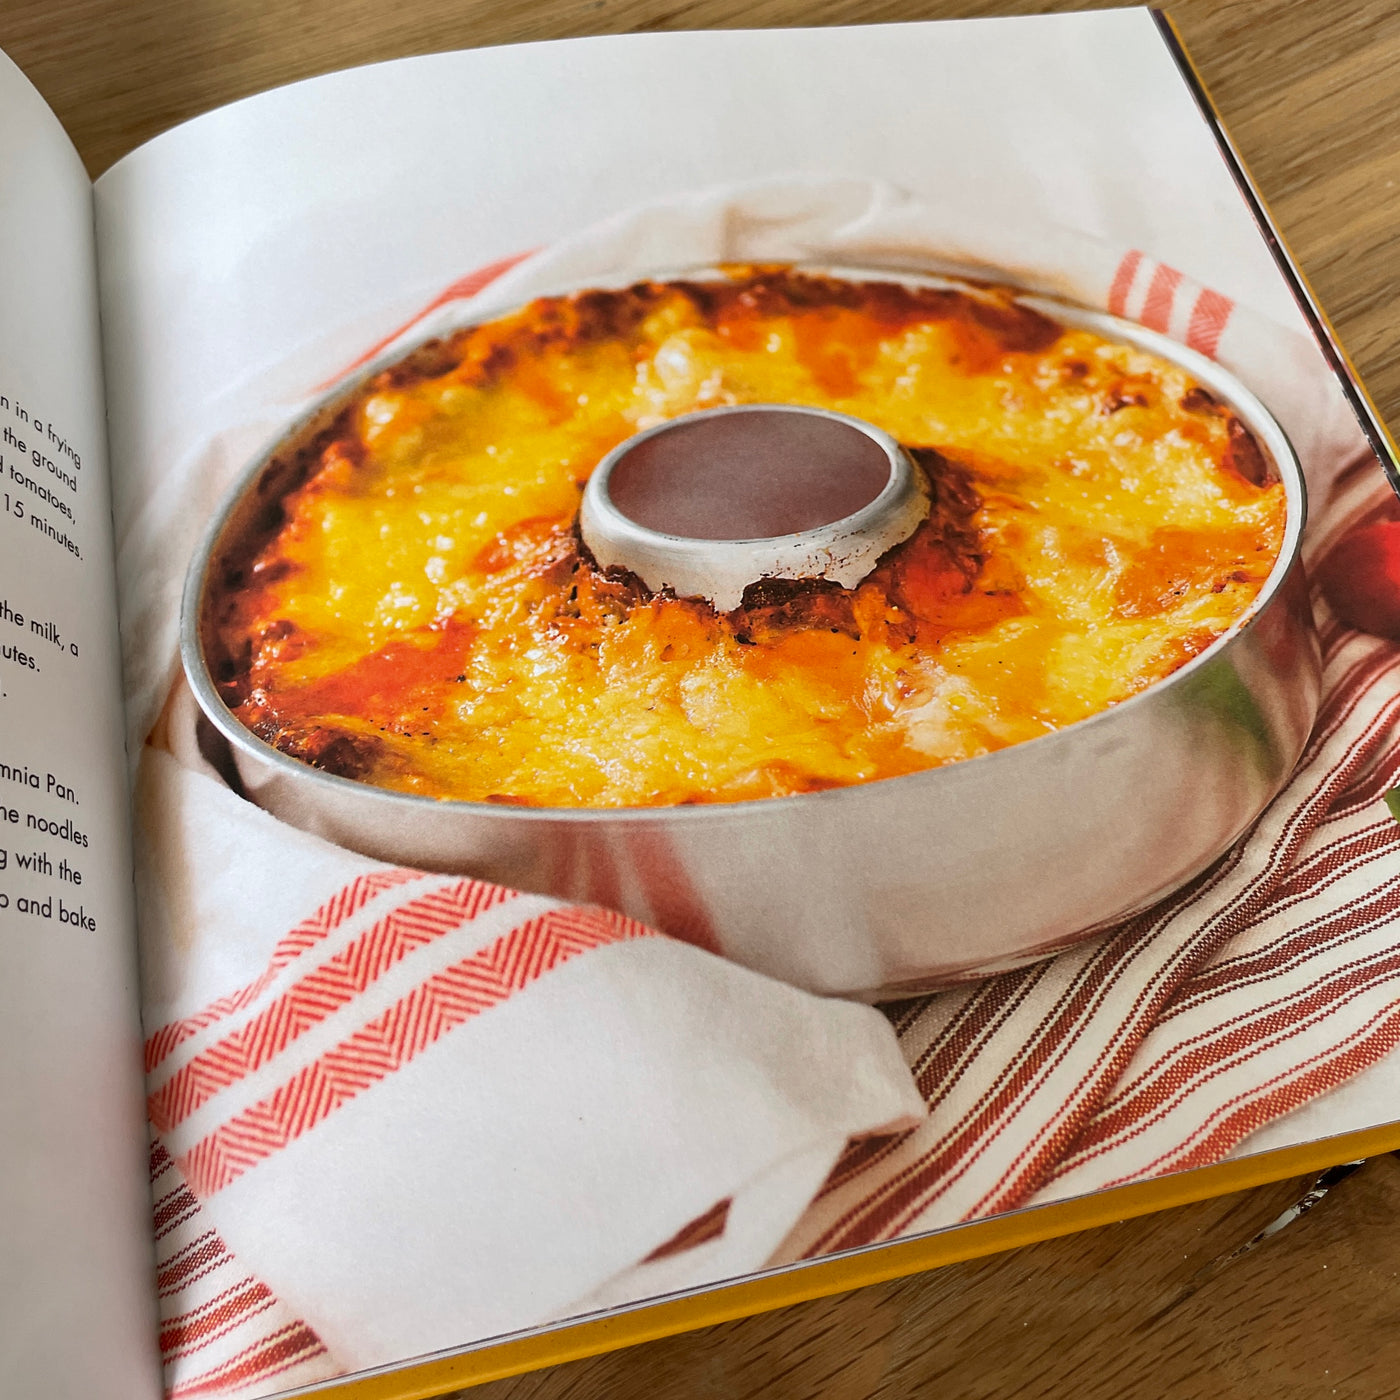 Omnia oven cook book